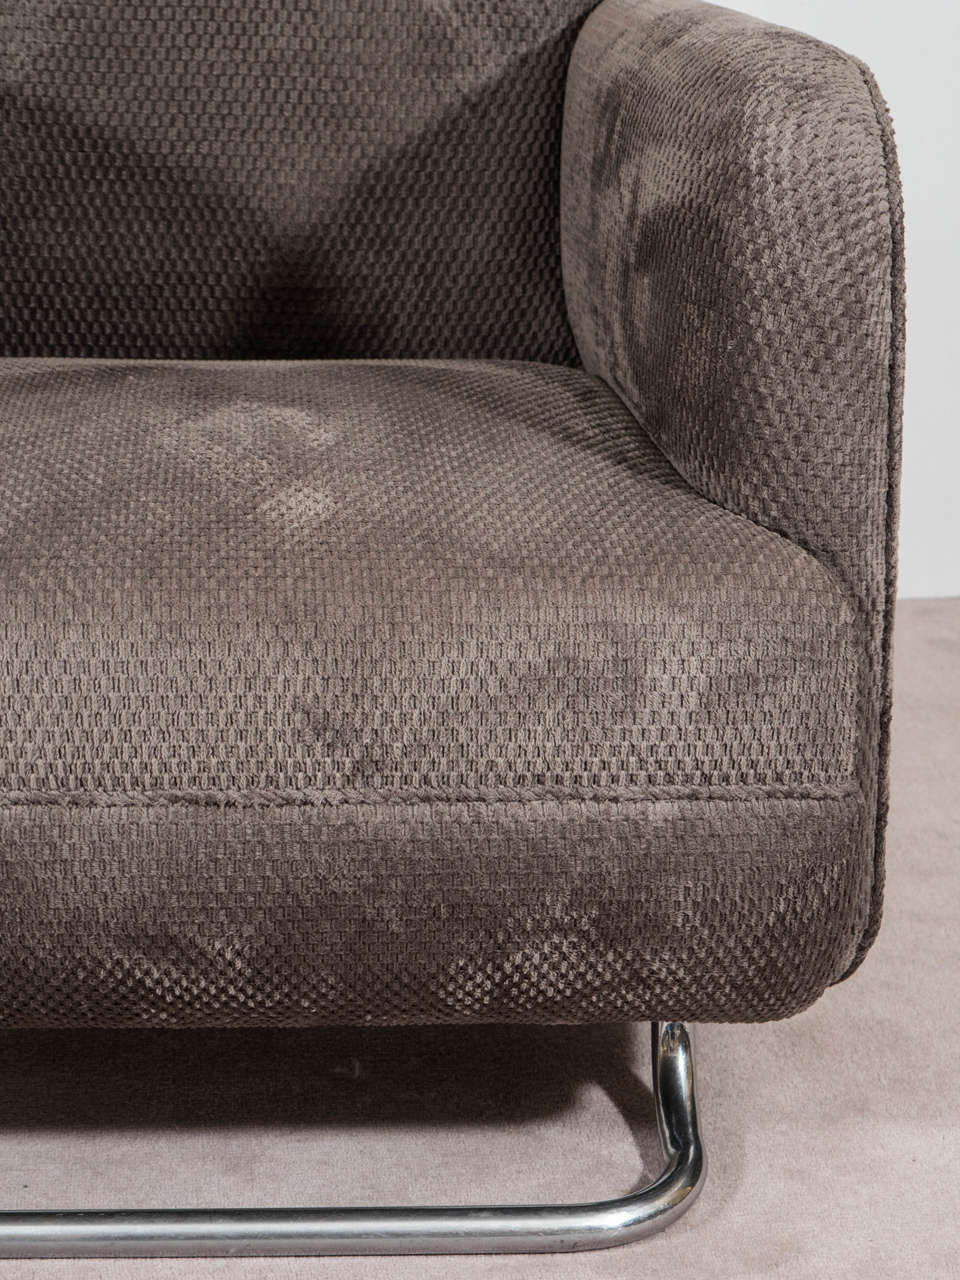 American Extraordinary Modernist Kem Weber Lounge Chair For Sale